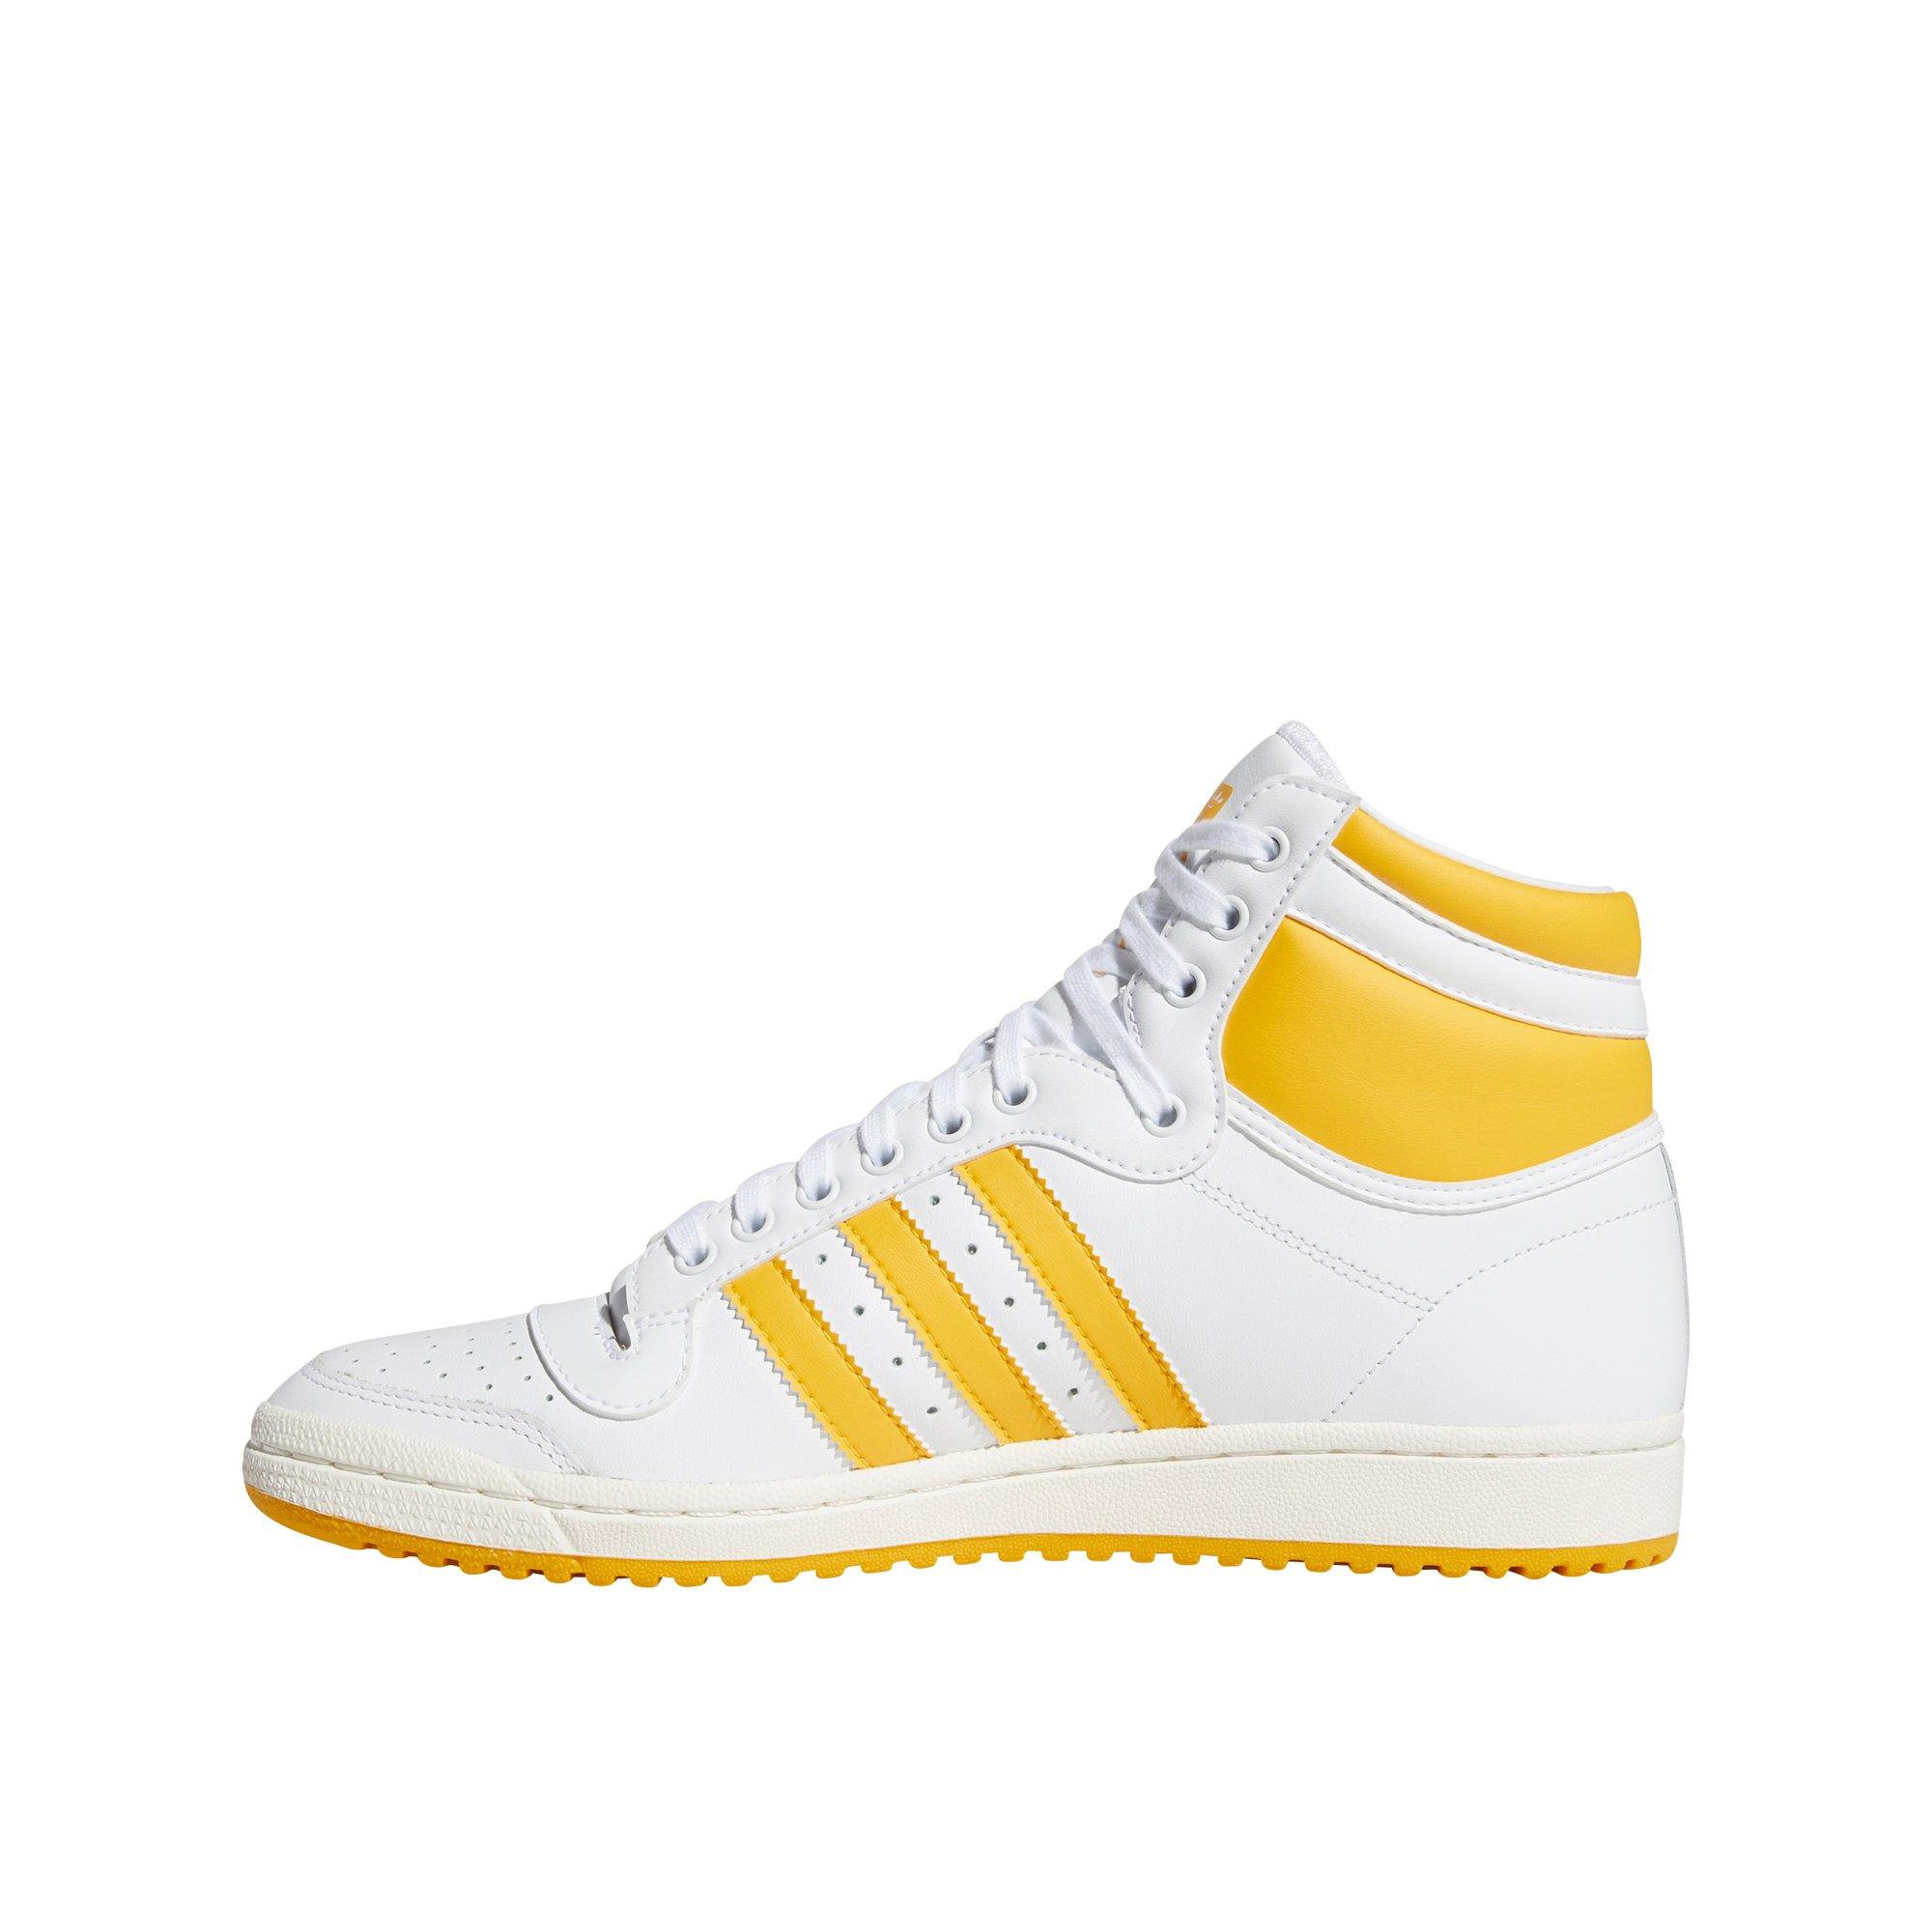 white and yellow top ten adidas